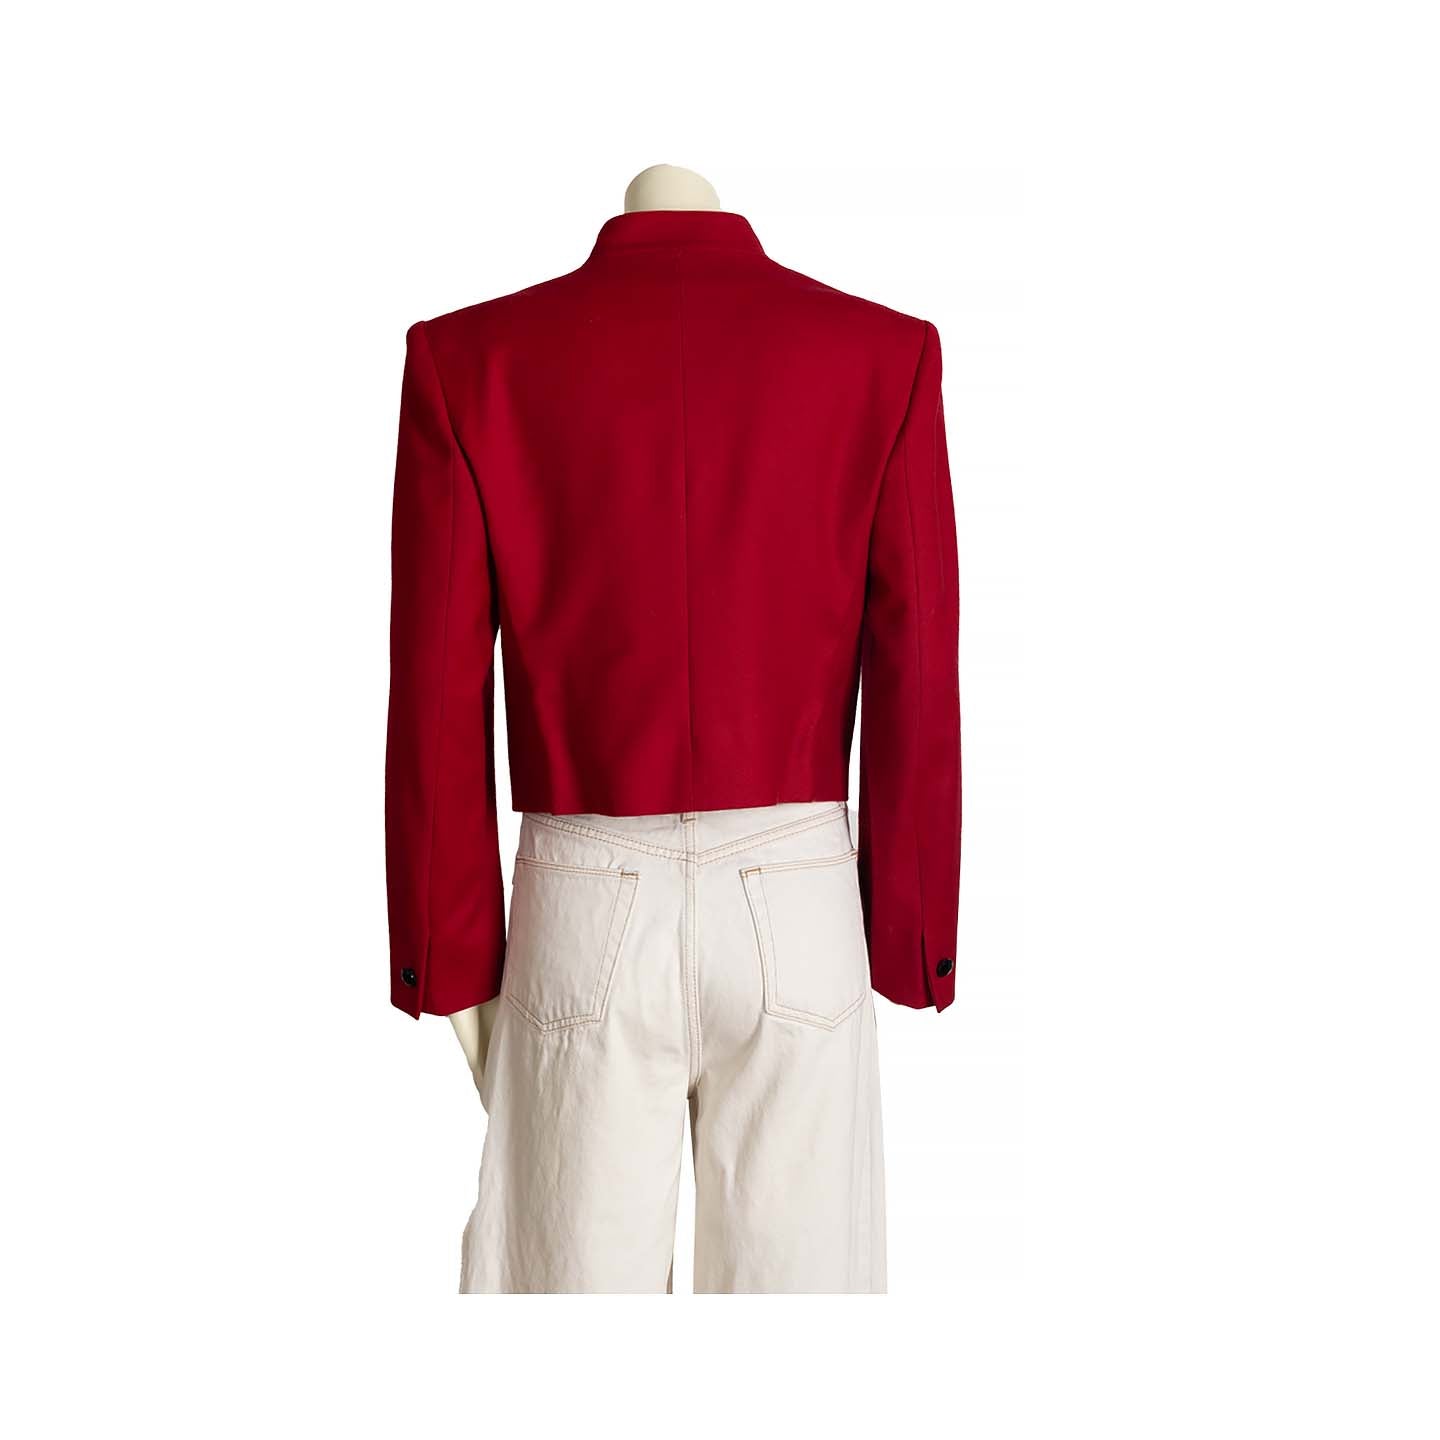 Guy Laroche wool red Spencer jacket - M - 1980s